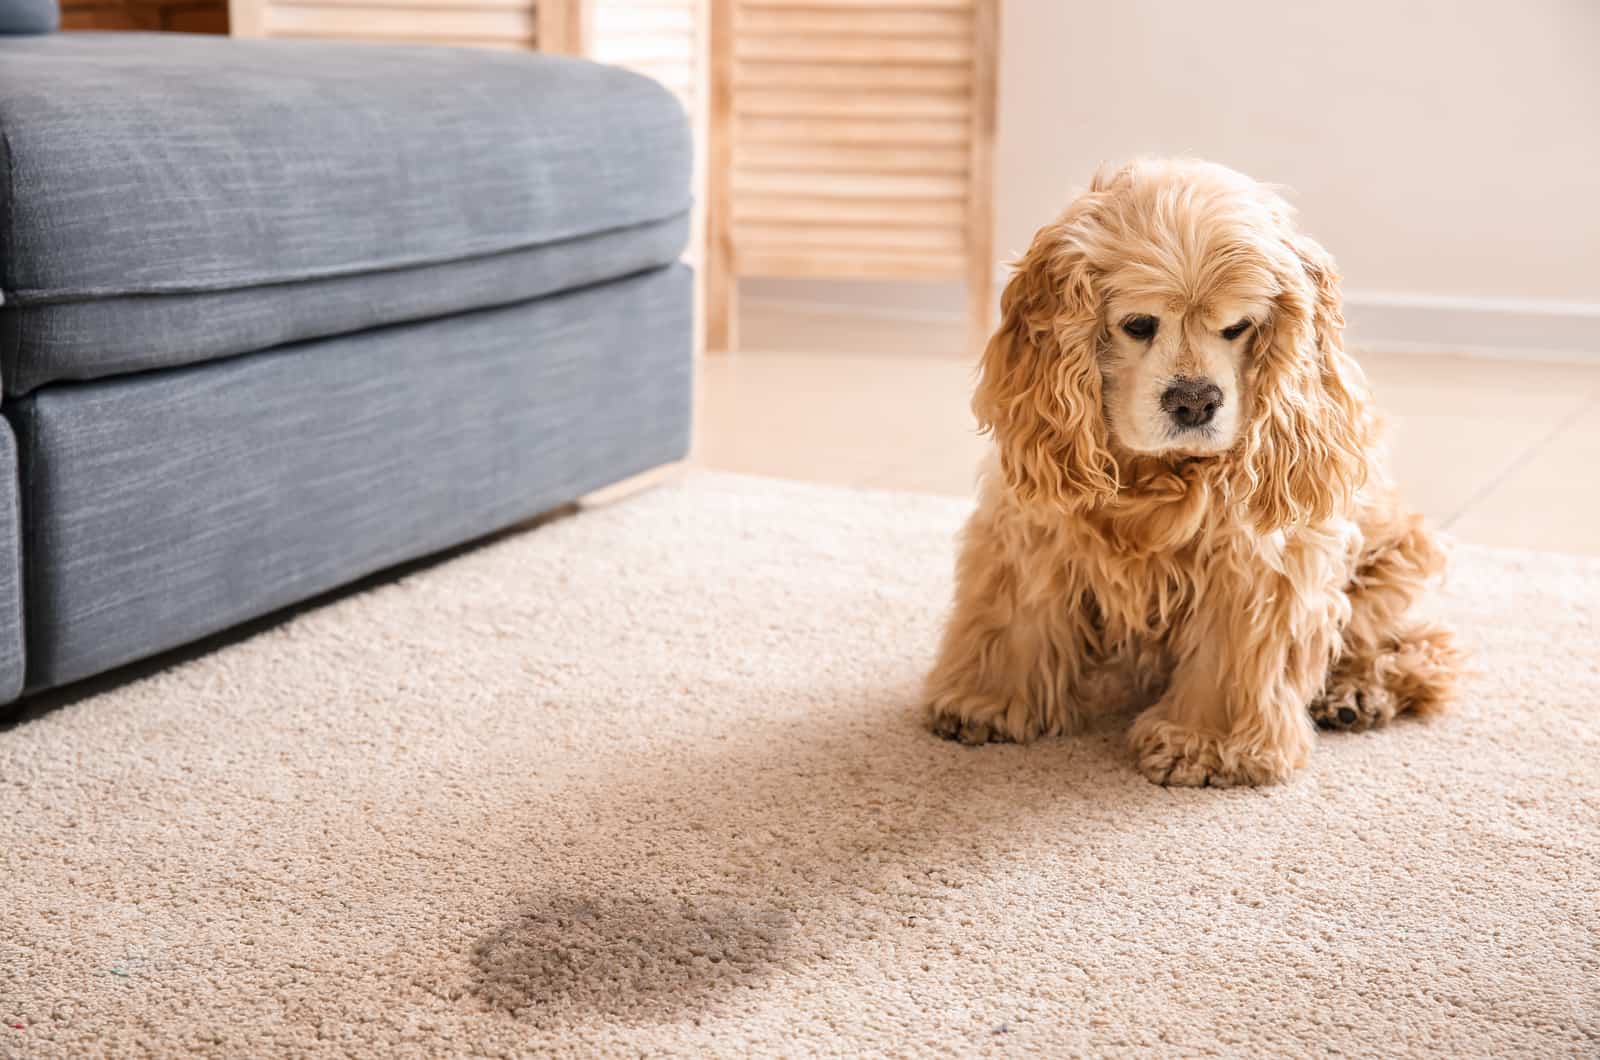 dog near a wet spot on carpet